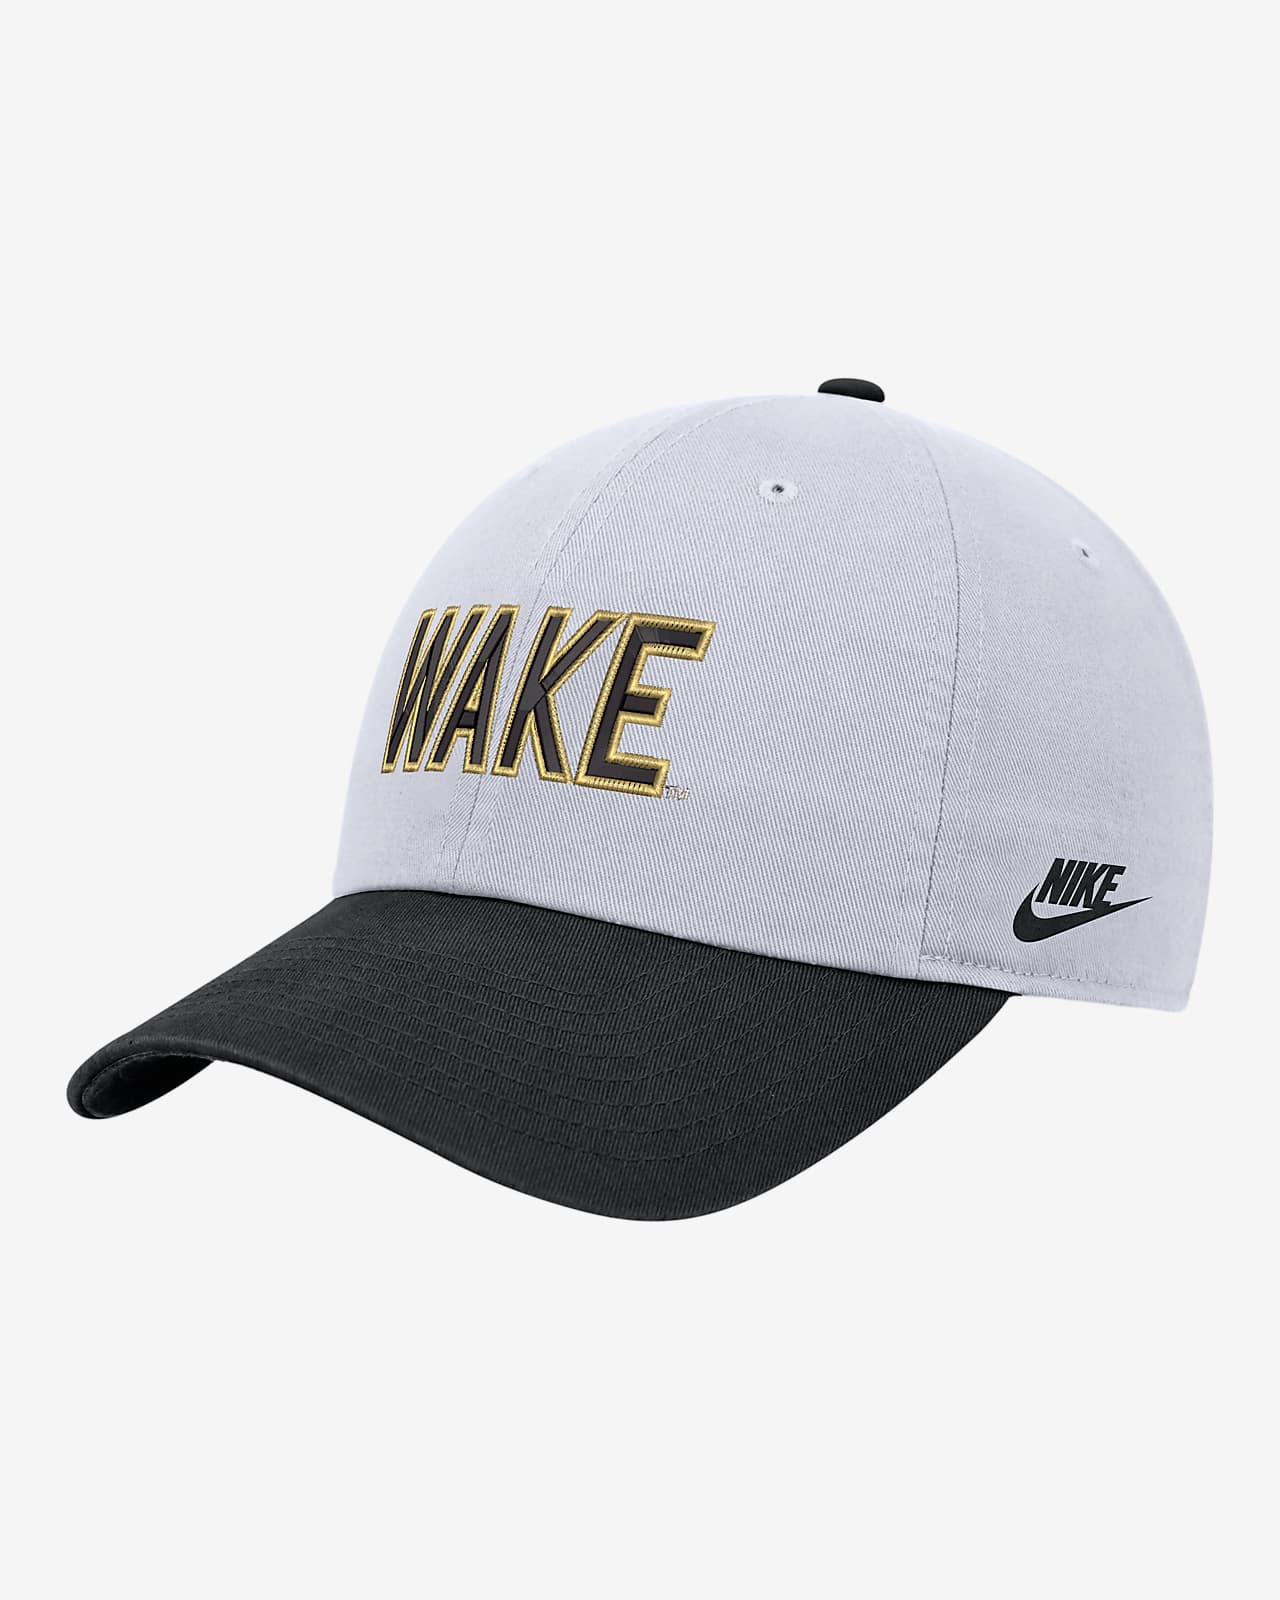 Wake Forest Nike College Campus Cap